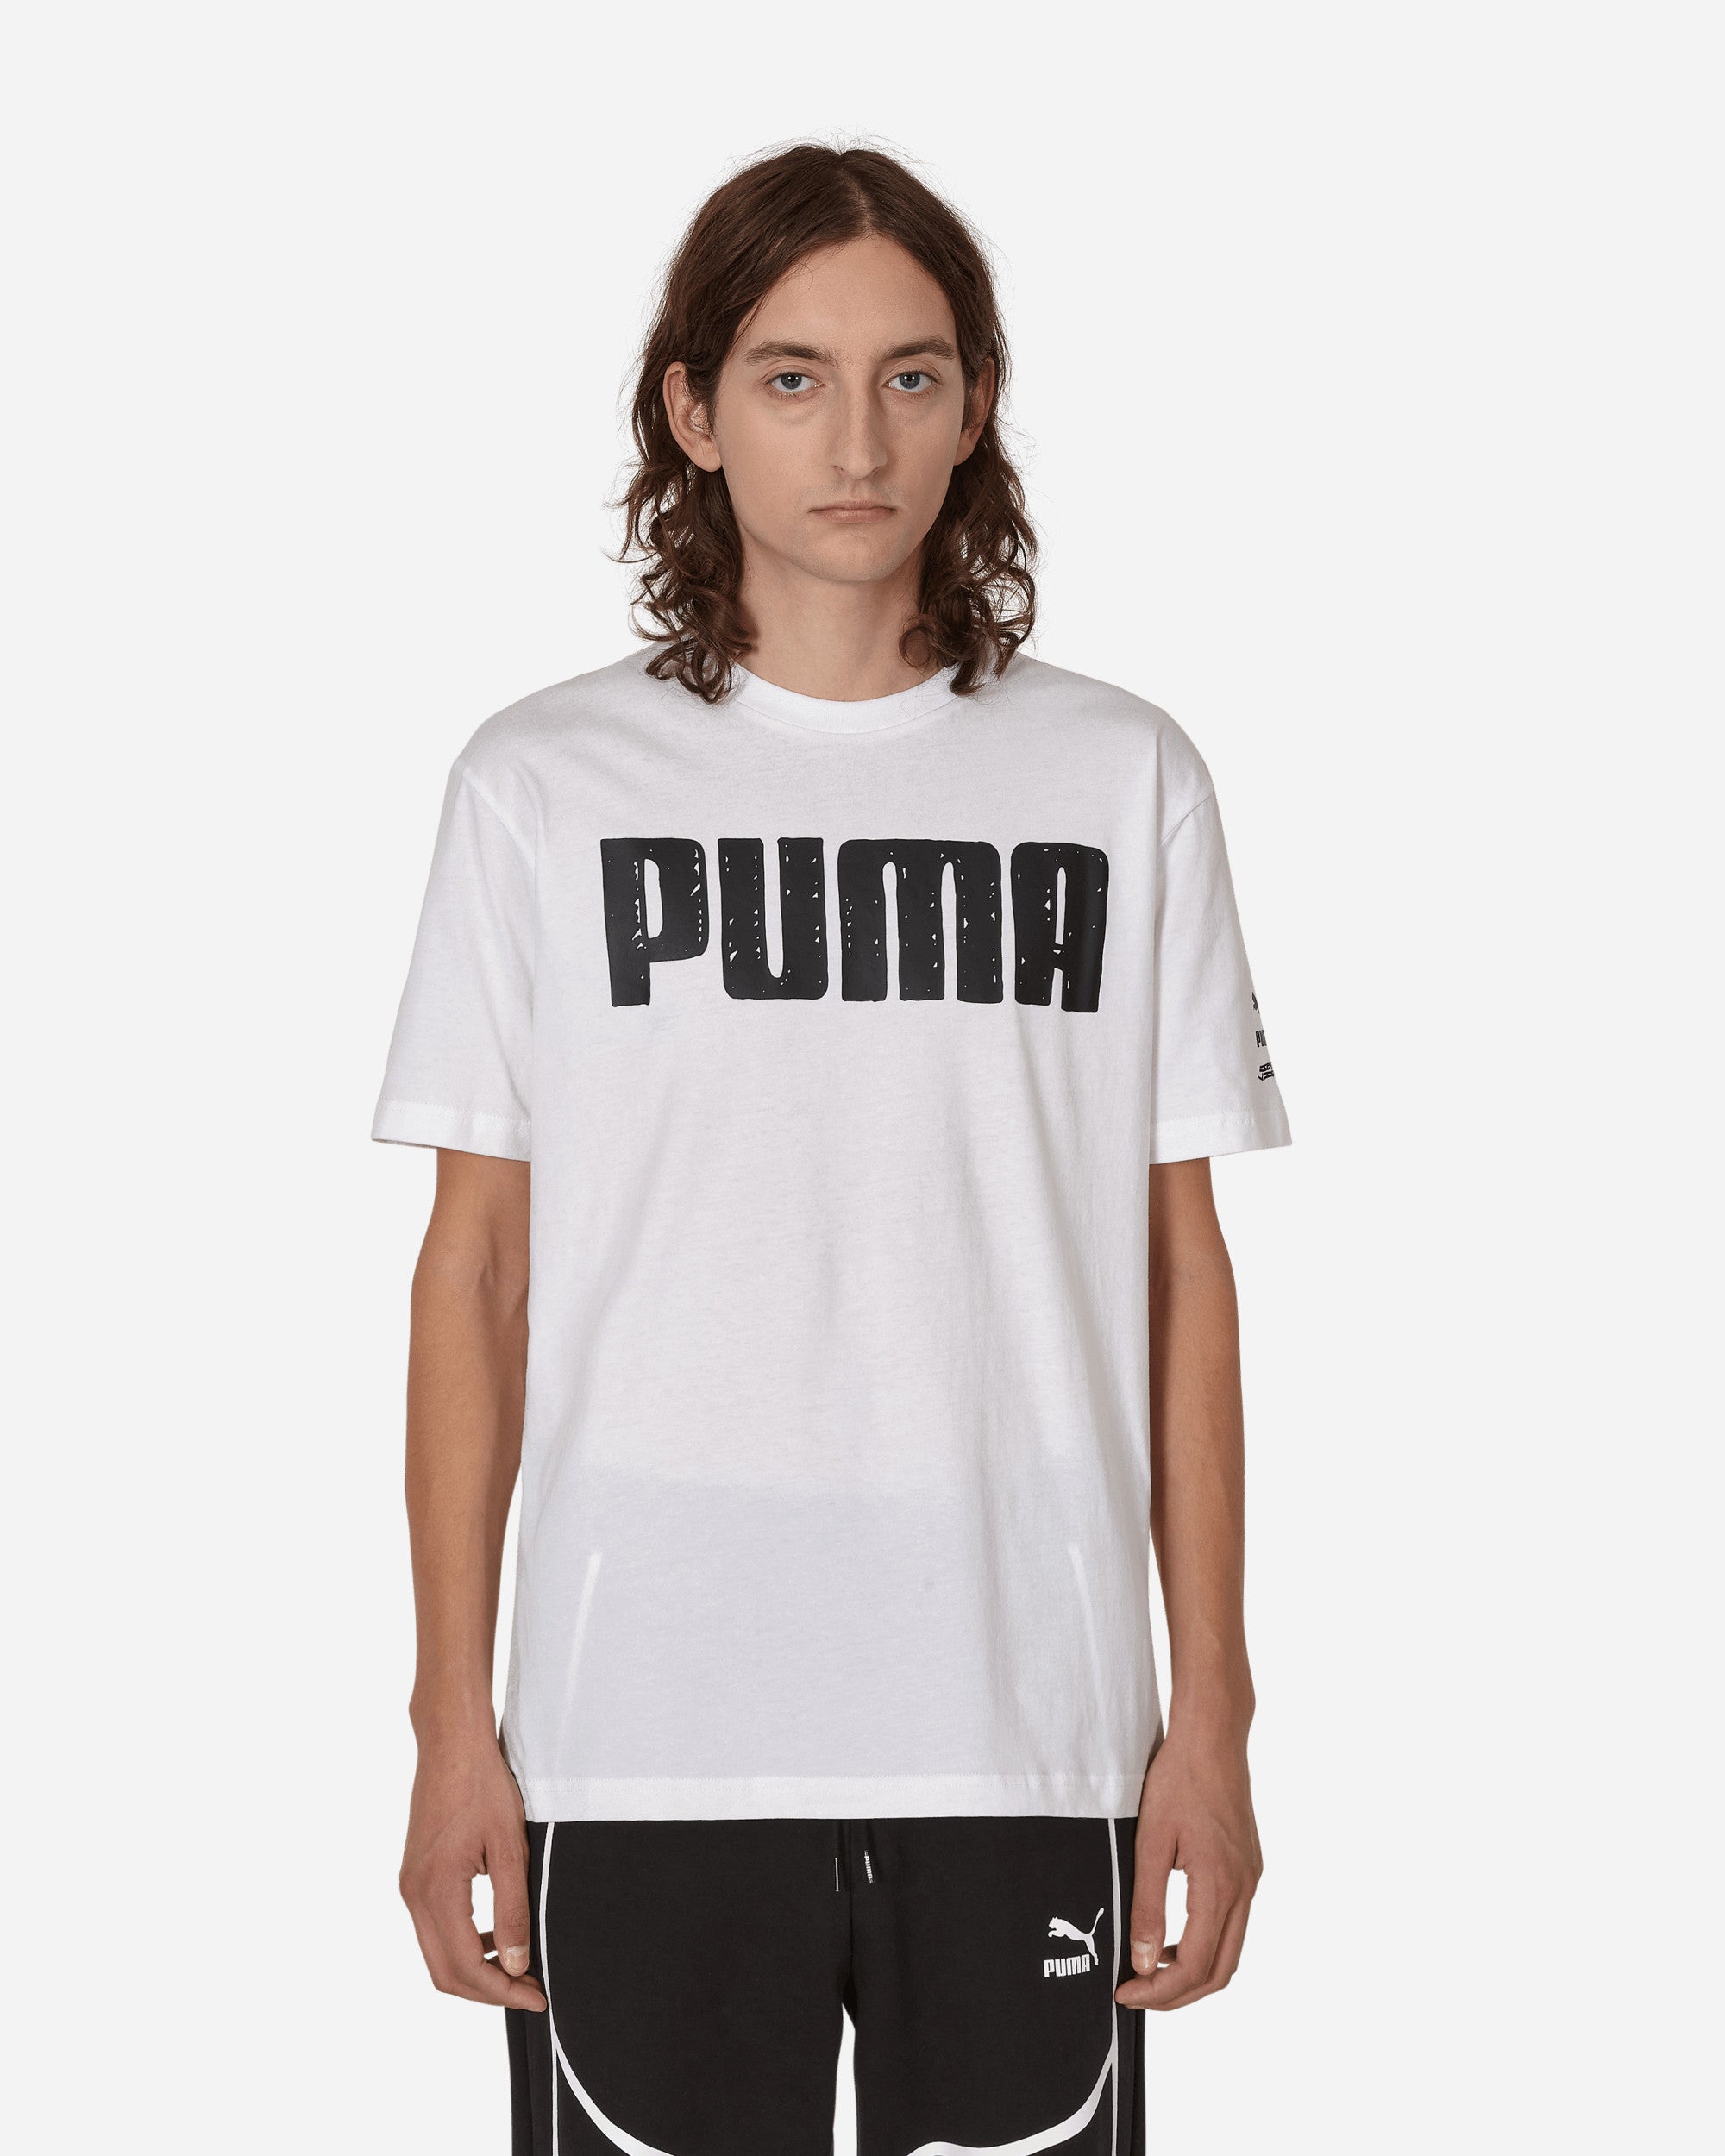 Puma Puma X Joshua Vides Tee Puma White Shirts Shortsleeve 535432-02